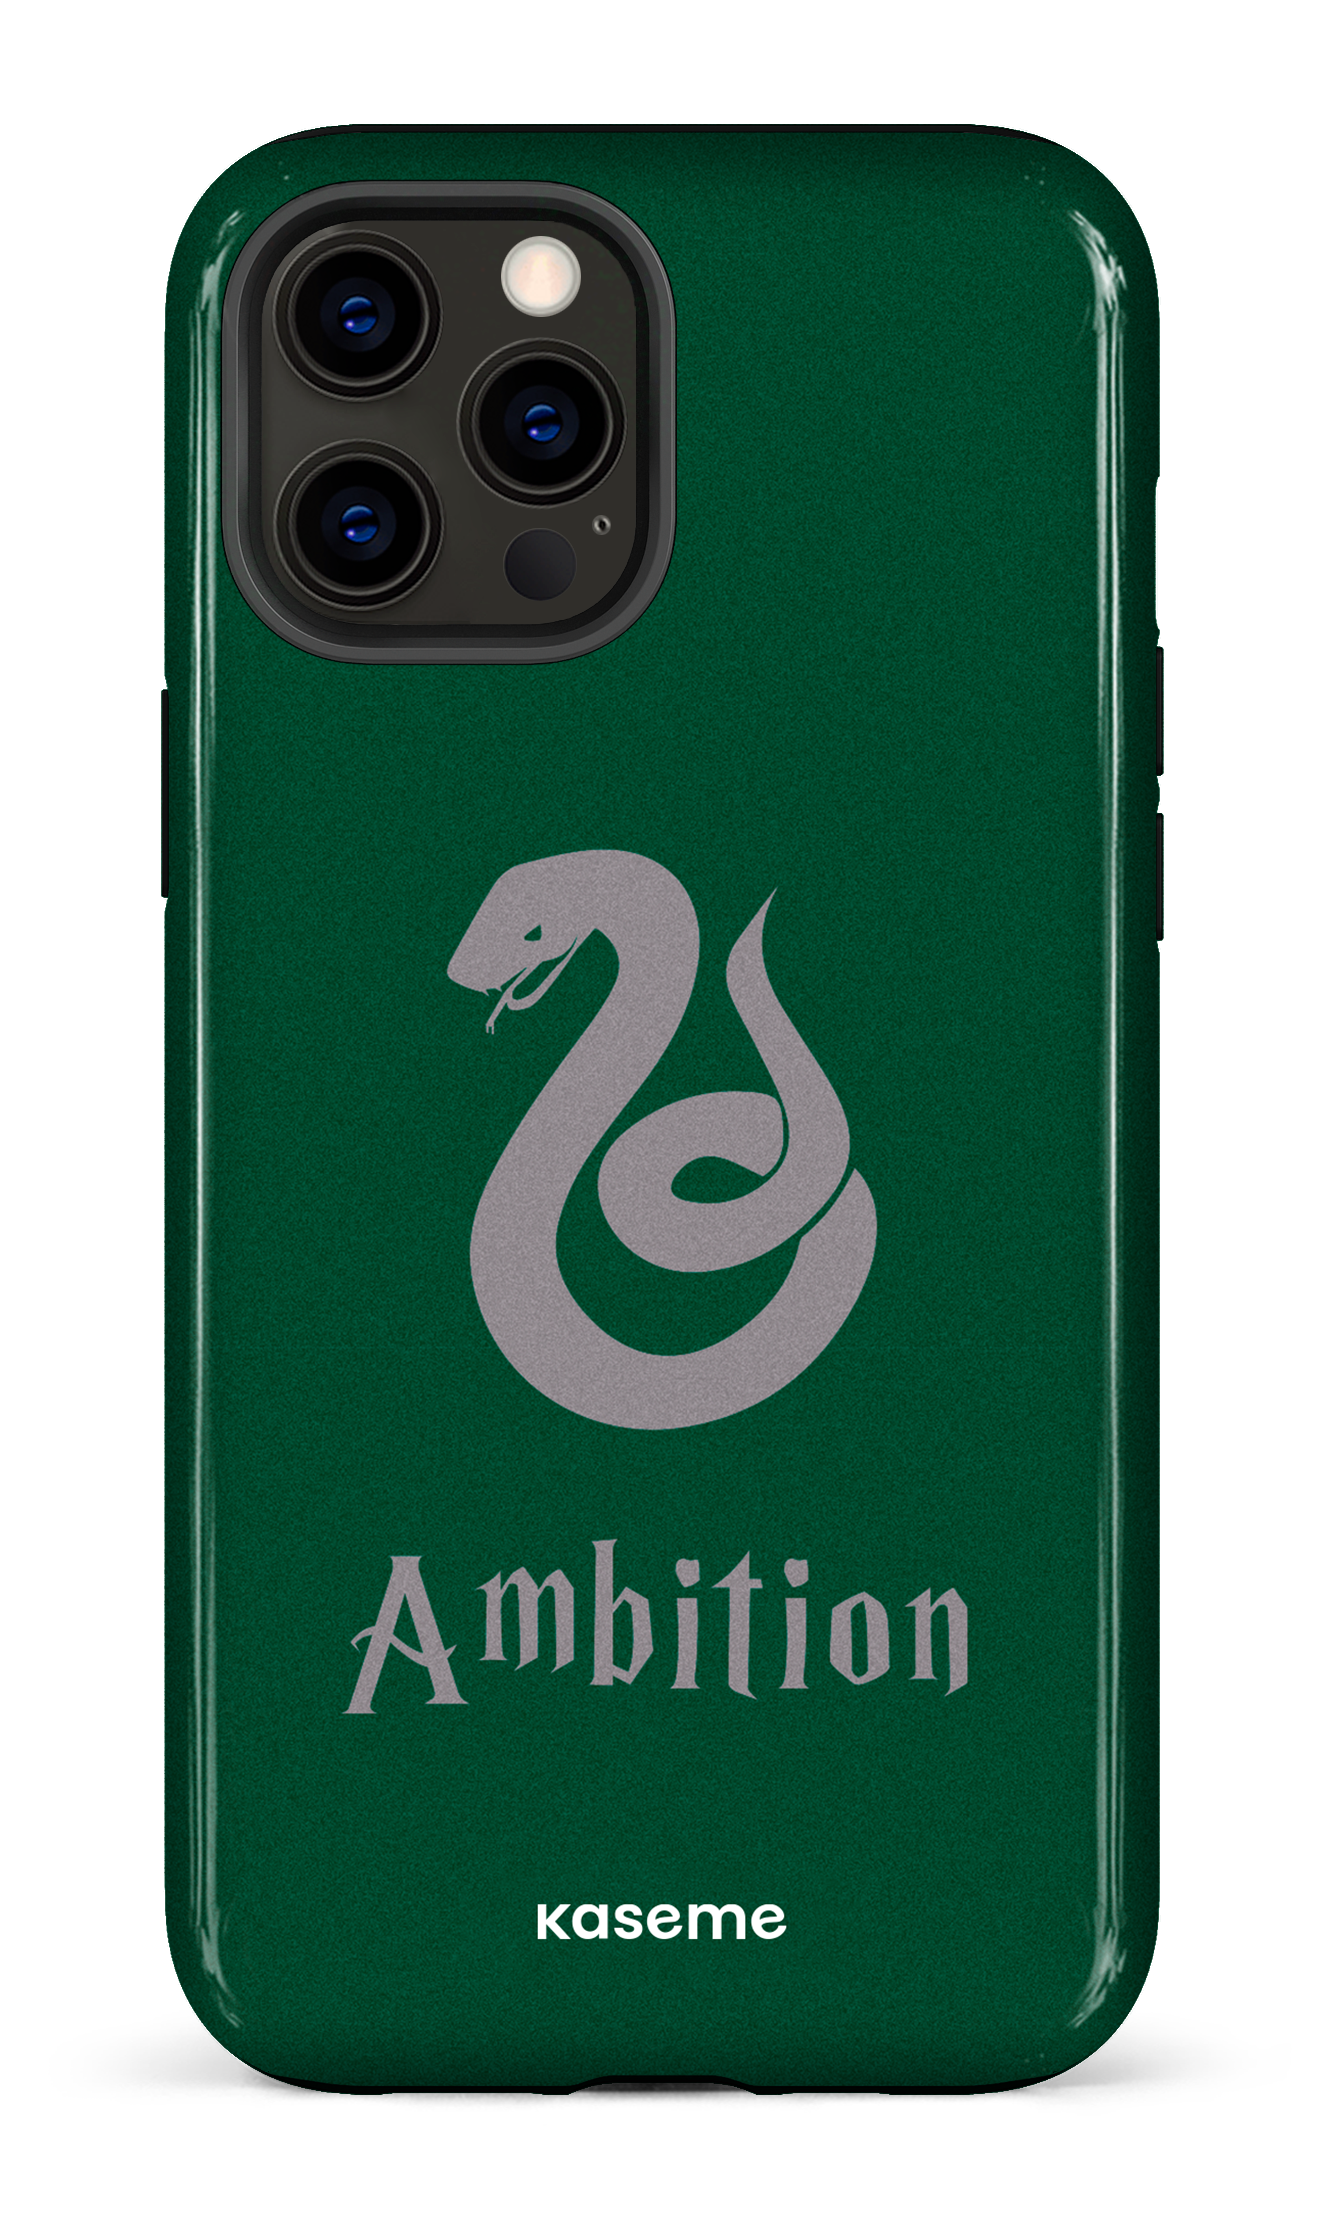 Ambition - iPhone 12 Pro Max